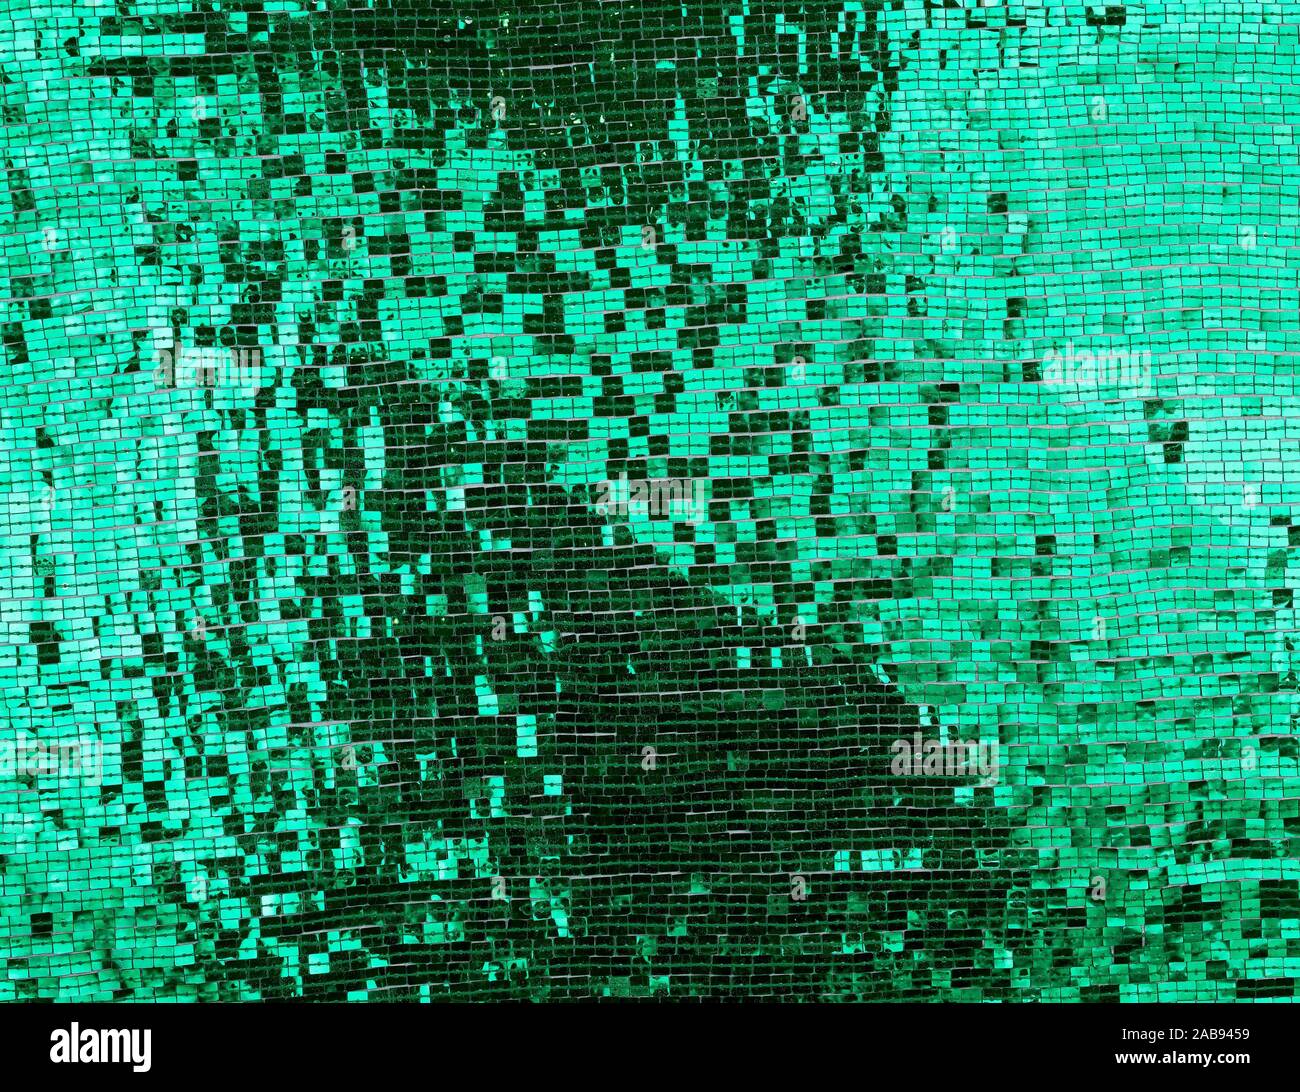 Fragment der Stoff bestickt mit grünen Quadrat Pailletten, full frame  Stockfotografie - Alamy